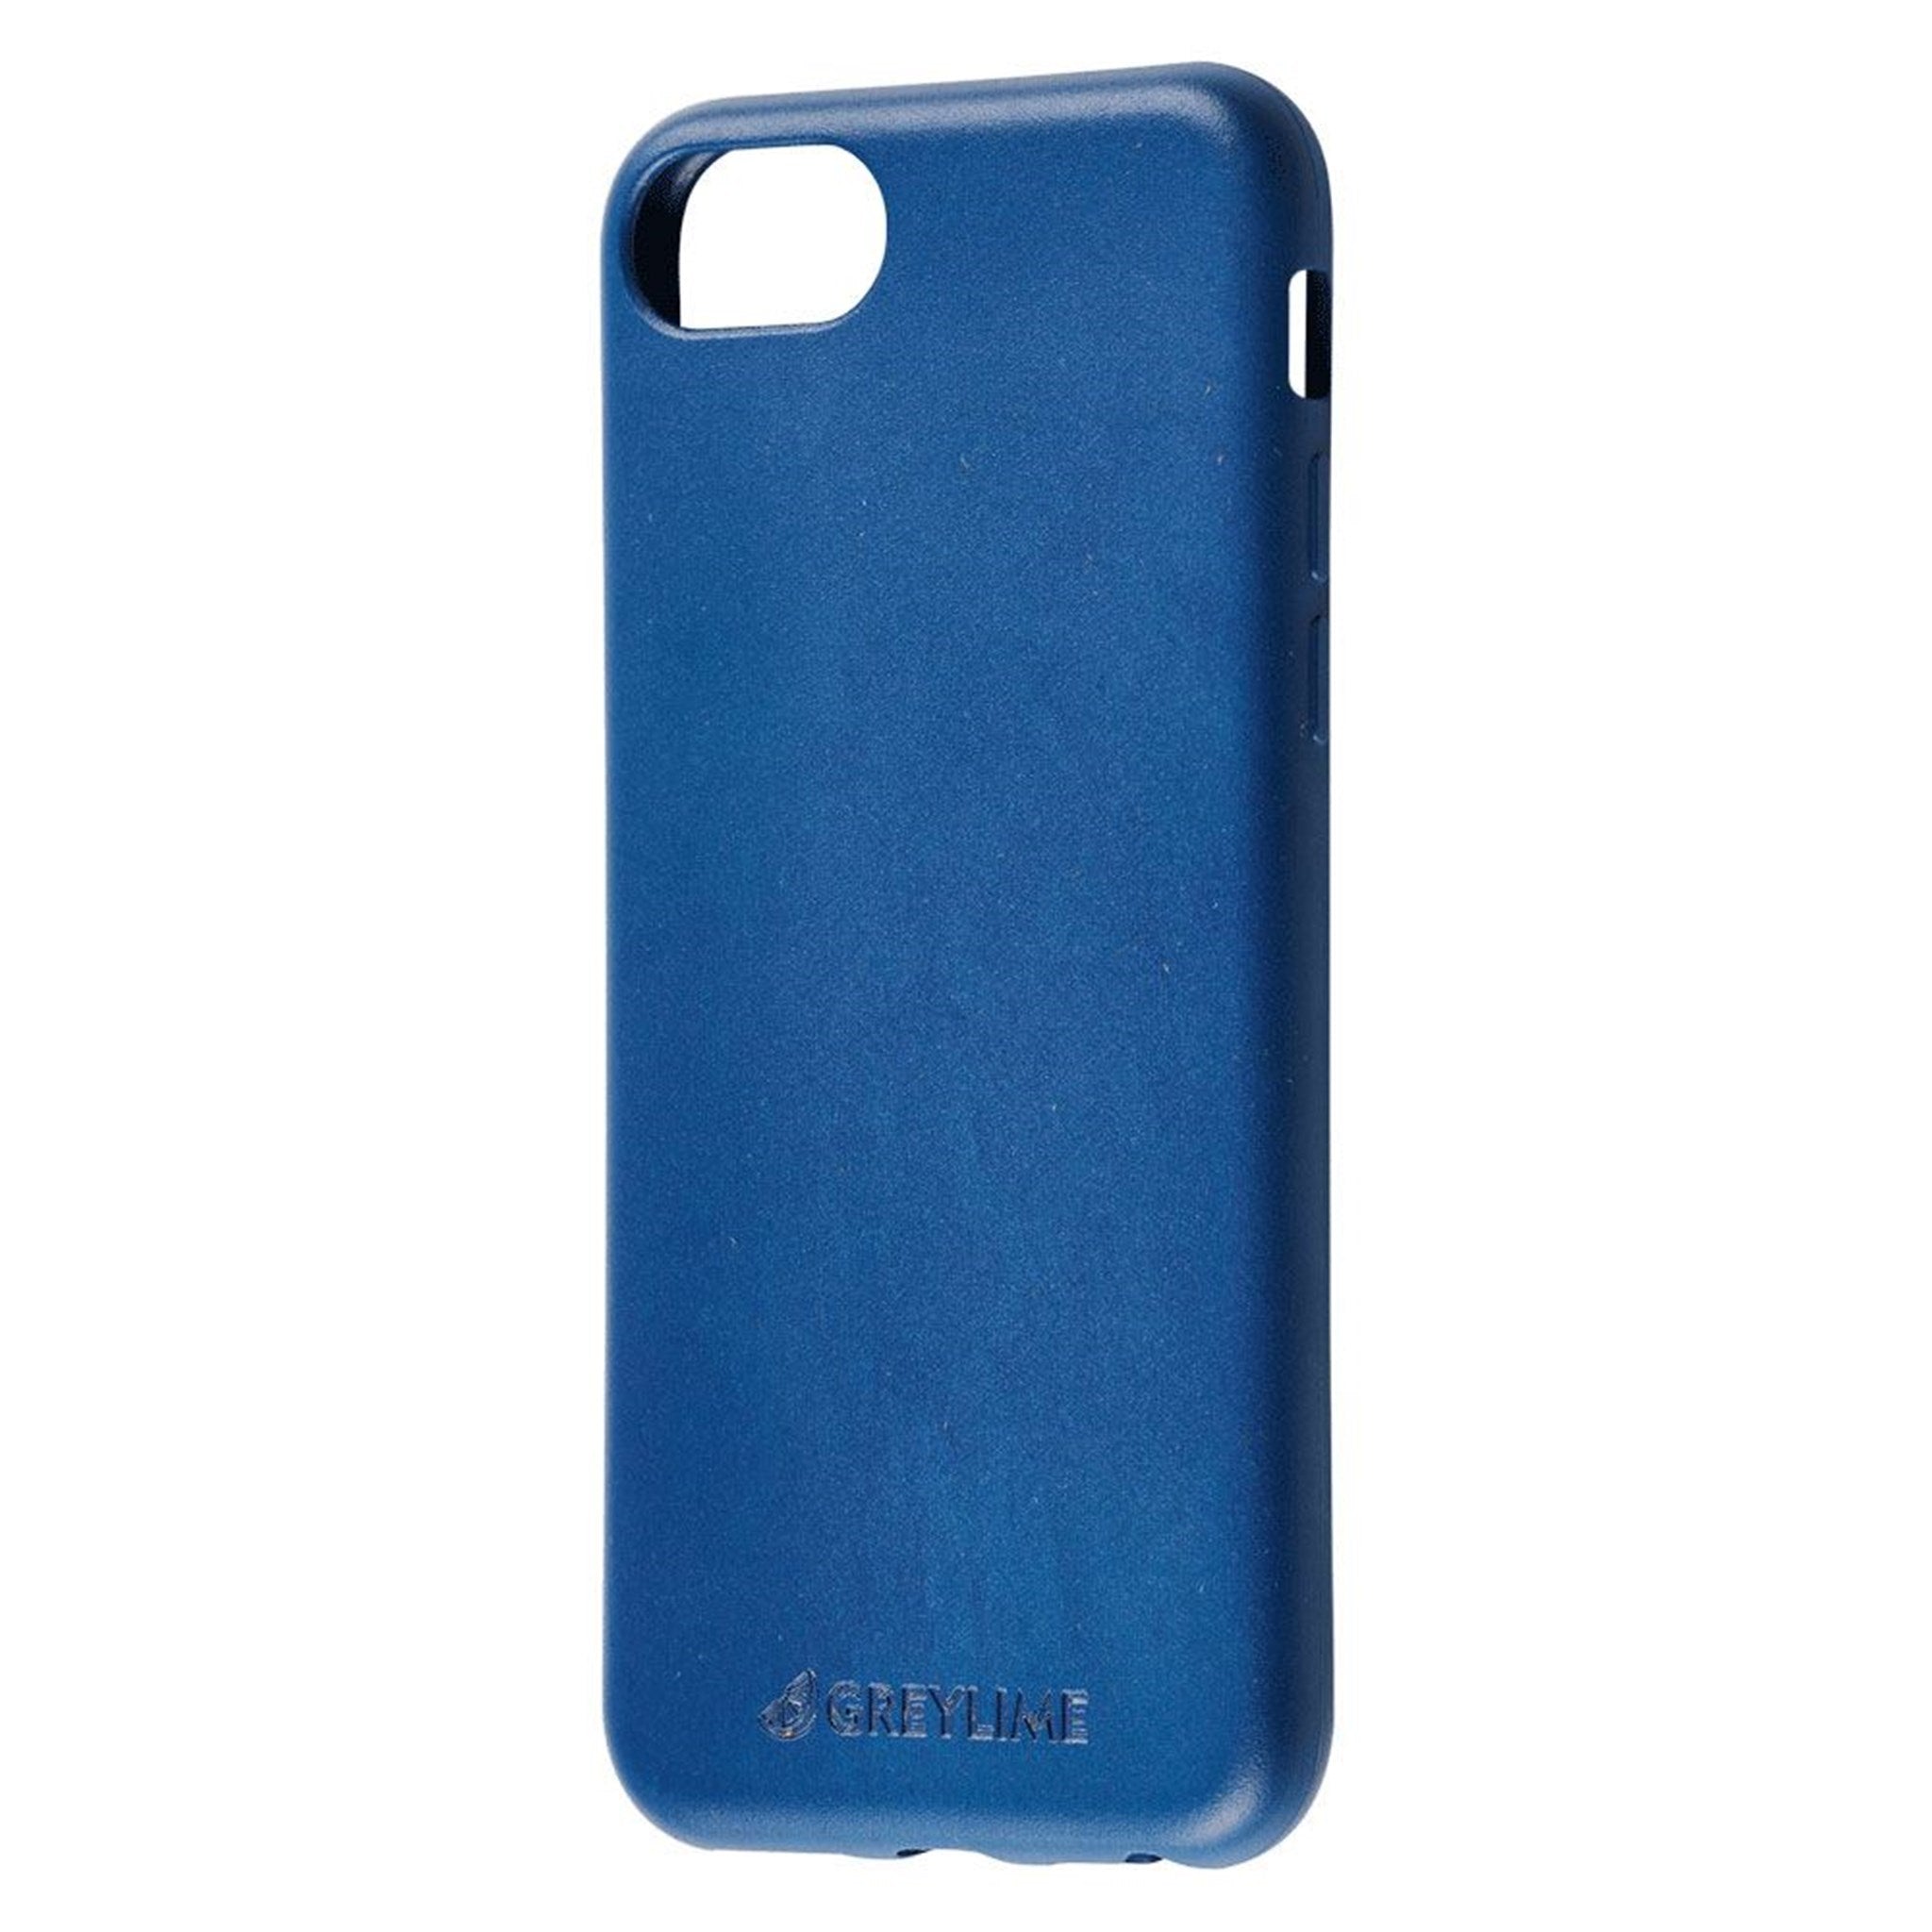 GreyLime-iPhone-6-7-8-SE-biodegradable-cover-Navy-blue-COIP67803-V2.jpg